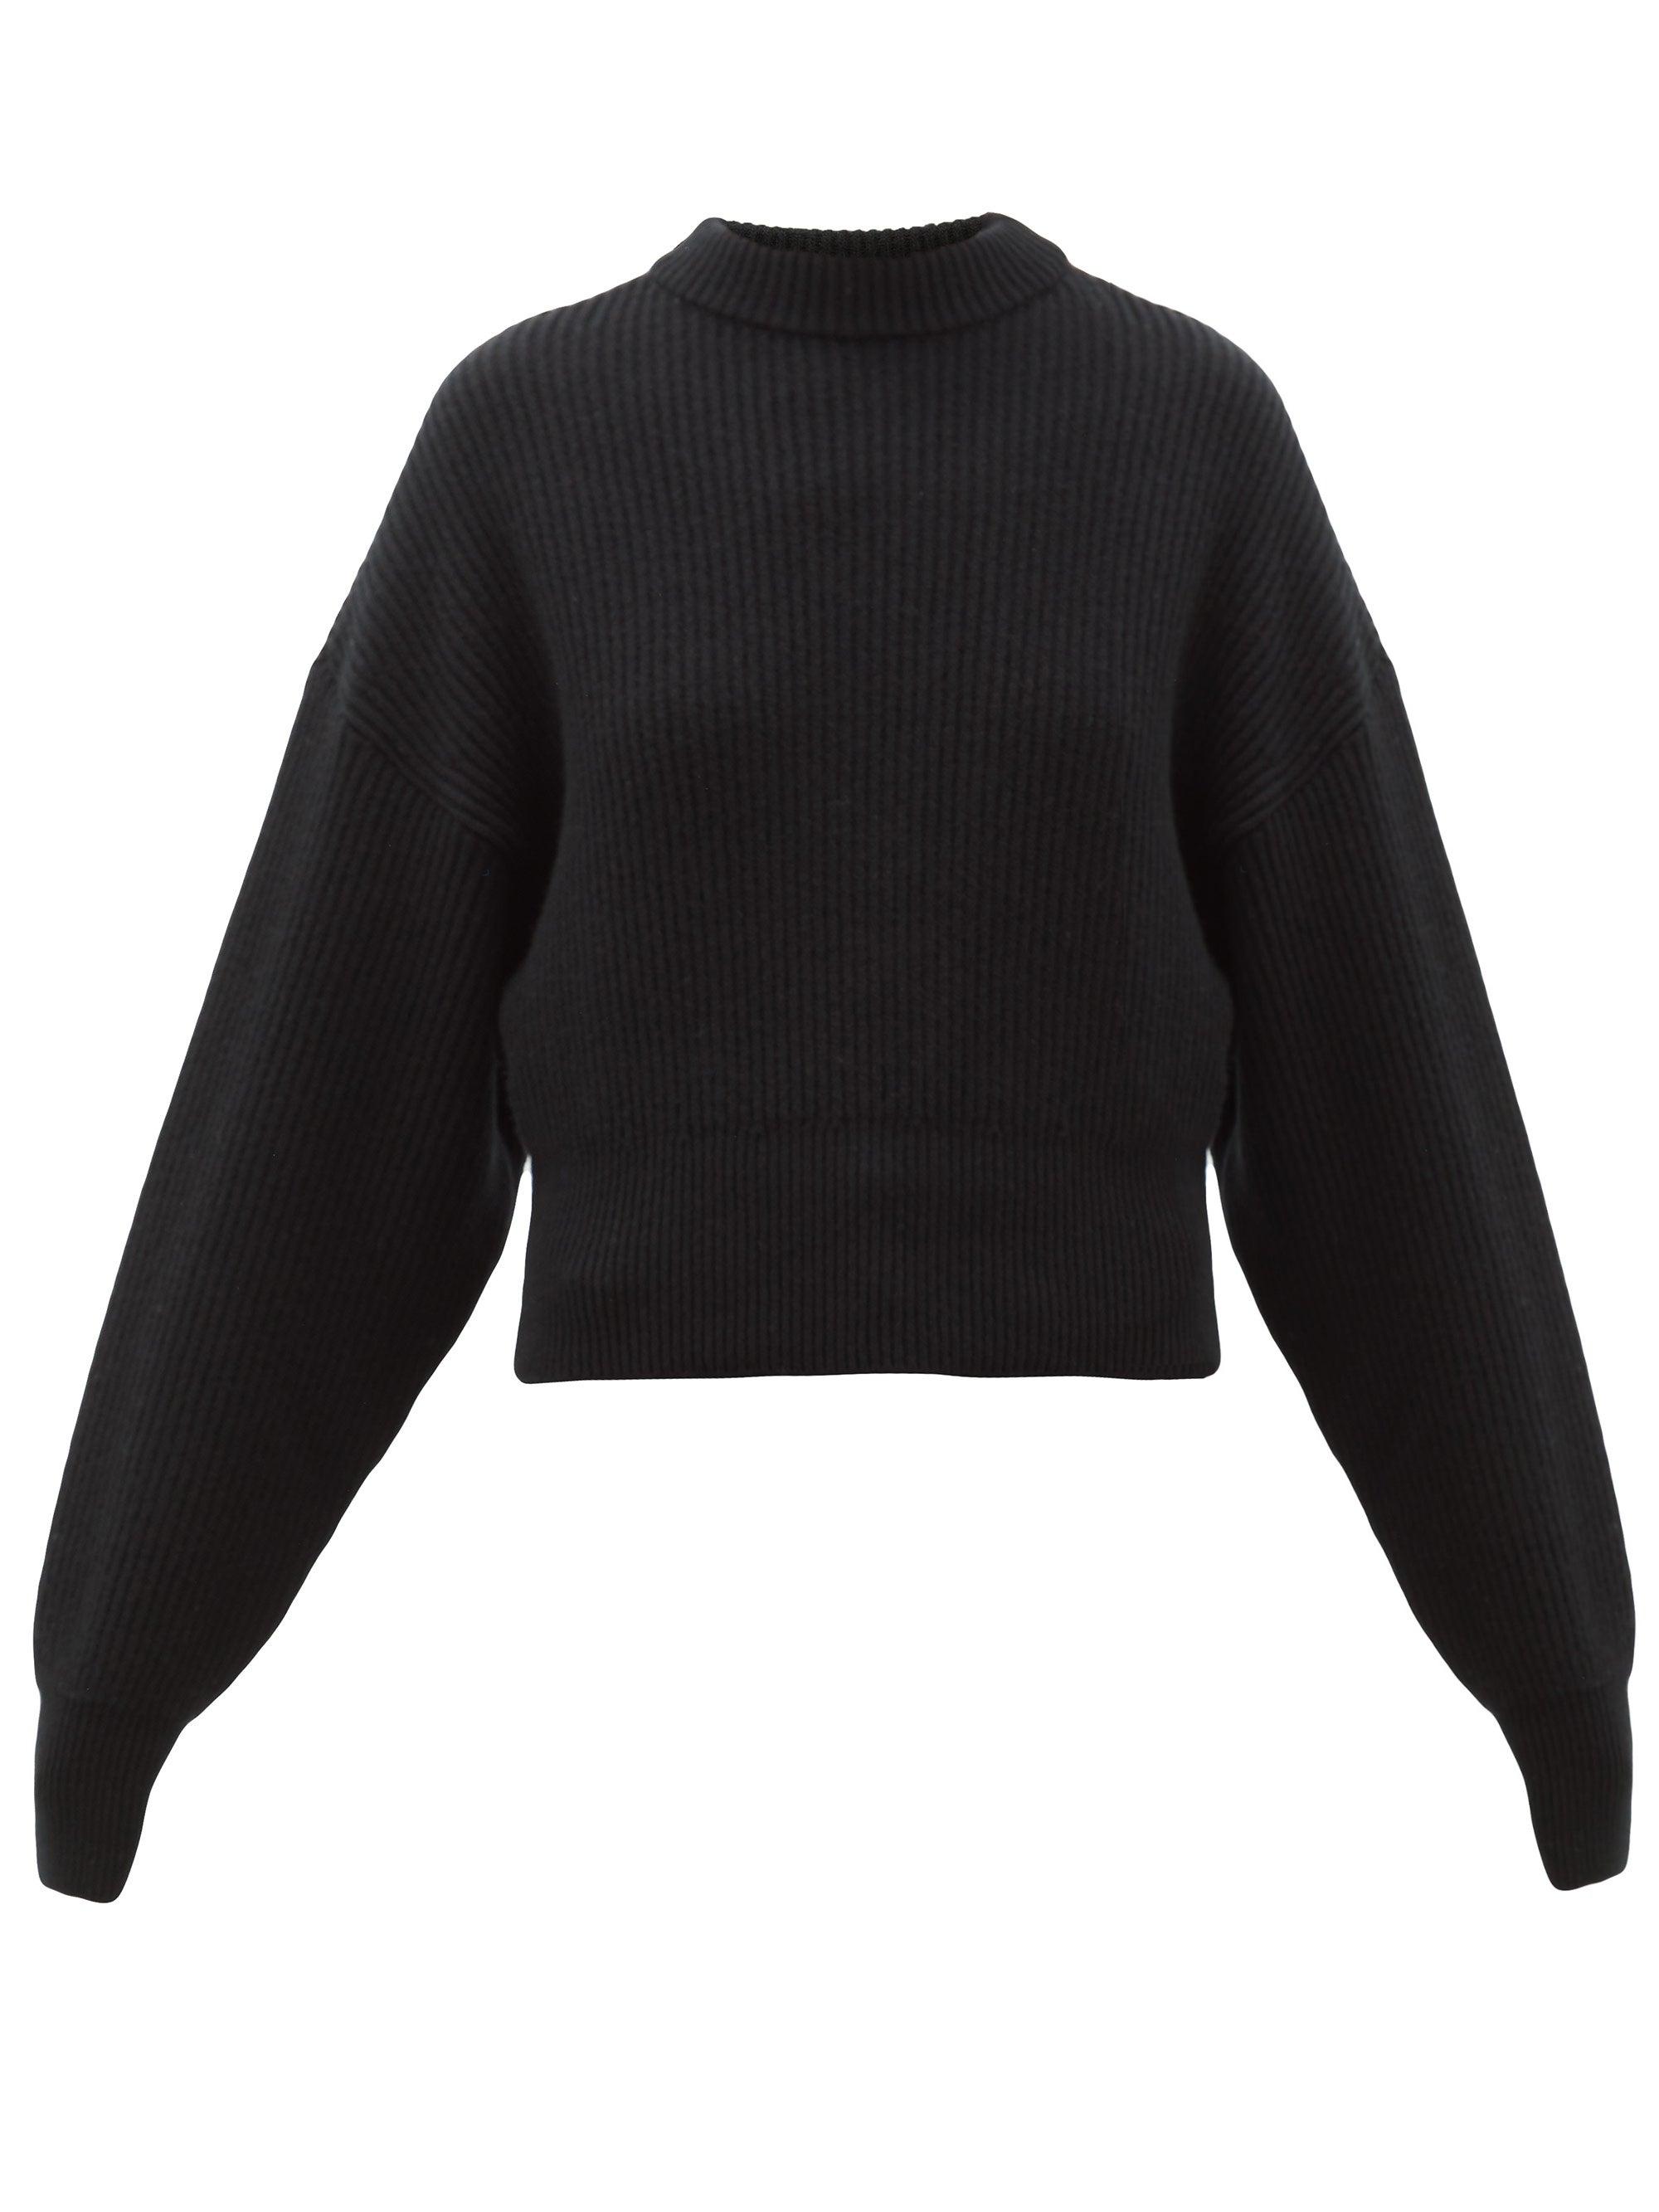 CORDOVA Megève Cropped Ribbed-knit Wool Sweater in Black - Lyst